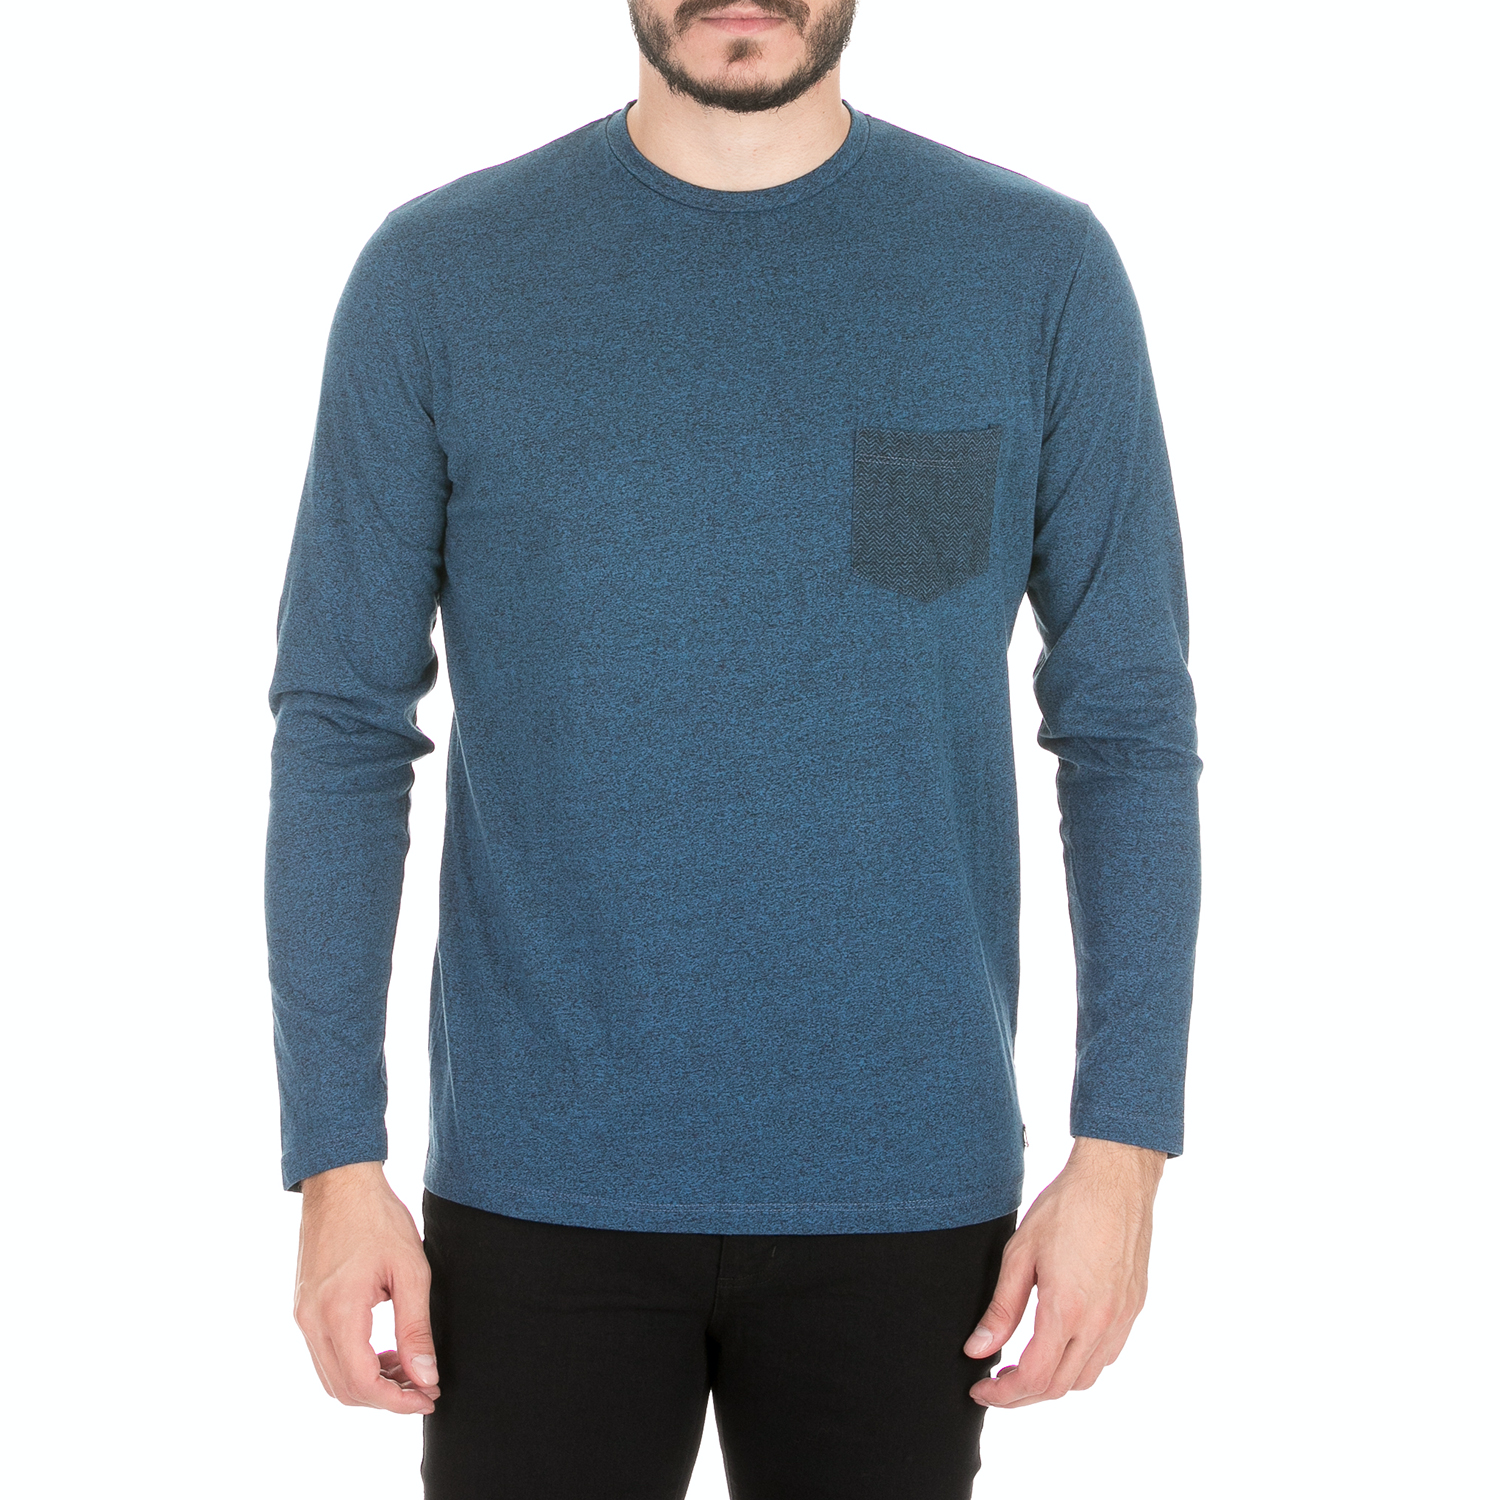 GREENWOOD - Ανδρική μπλούζα GREENWOOD μπλε Ανδρικά/Ρούχα/Μπλούζες/Μακρυμάνικες